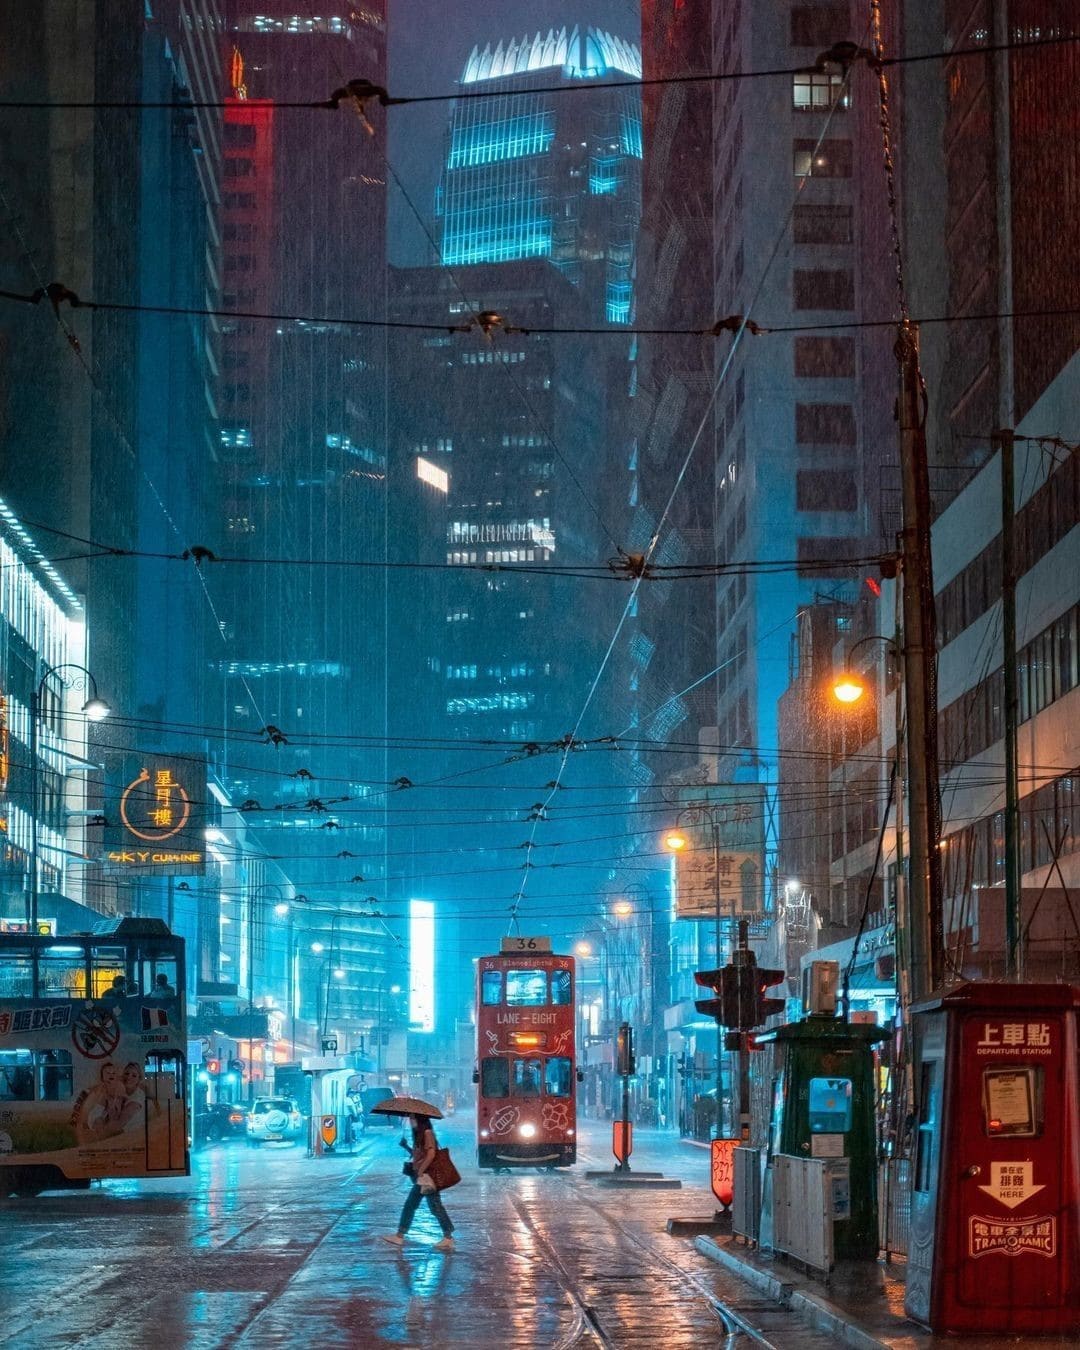 Rainy nights in Hong Kong (Credit to @mikemikecat)